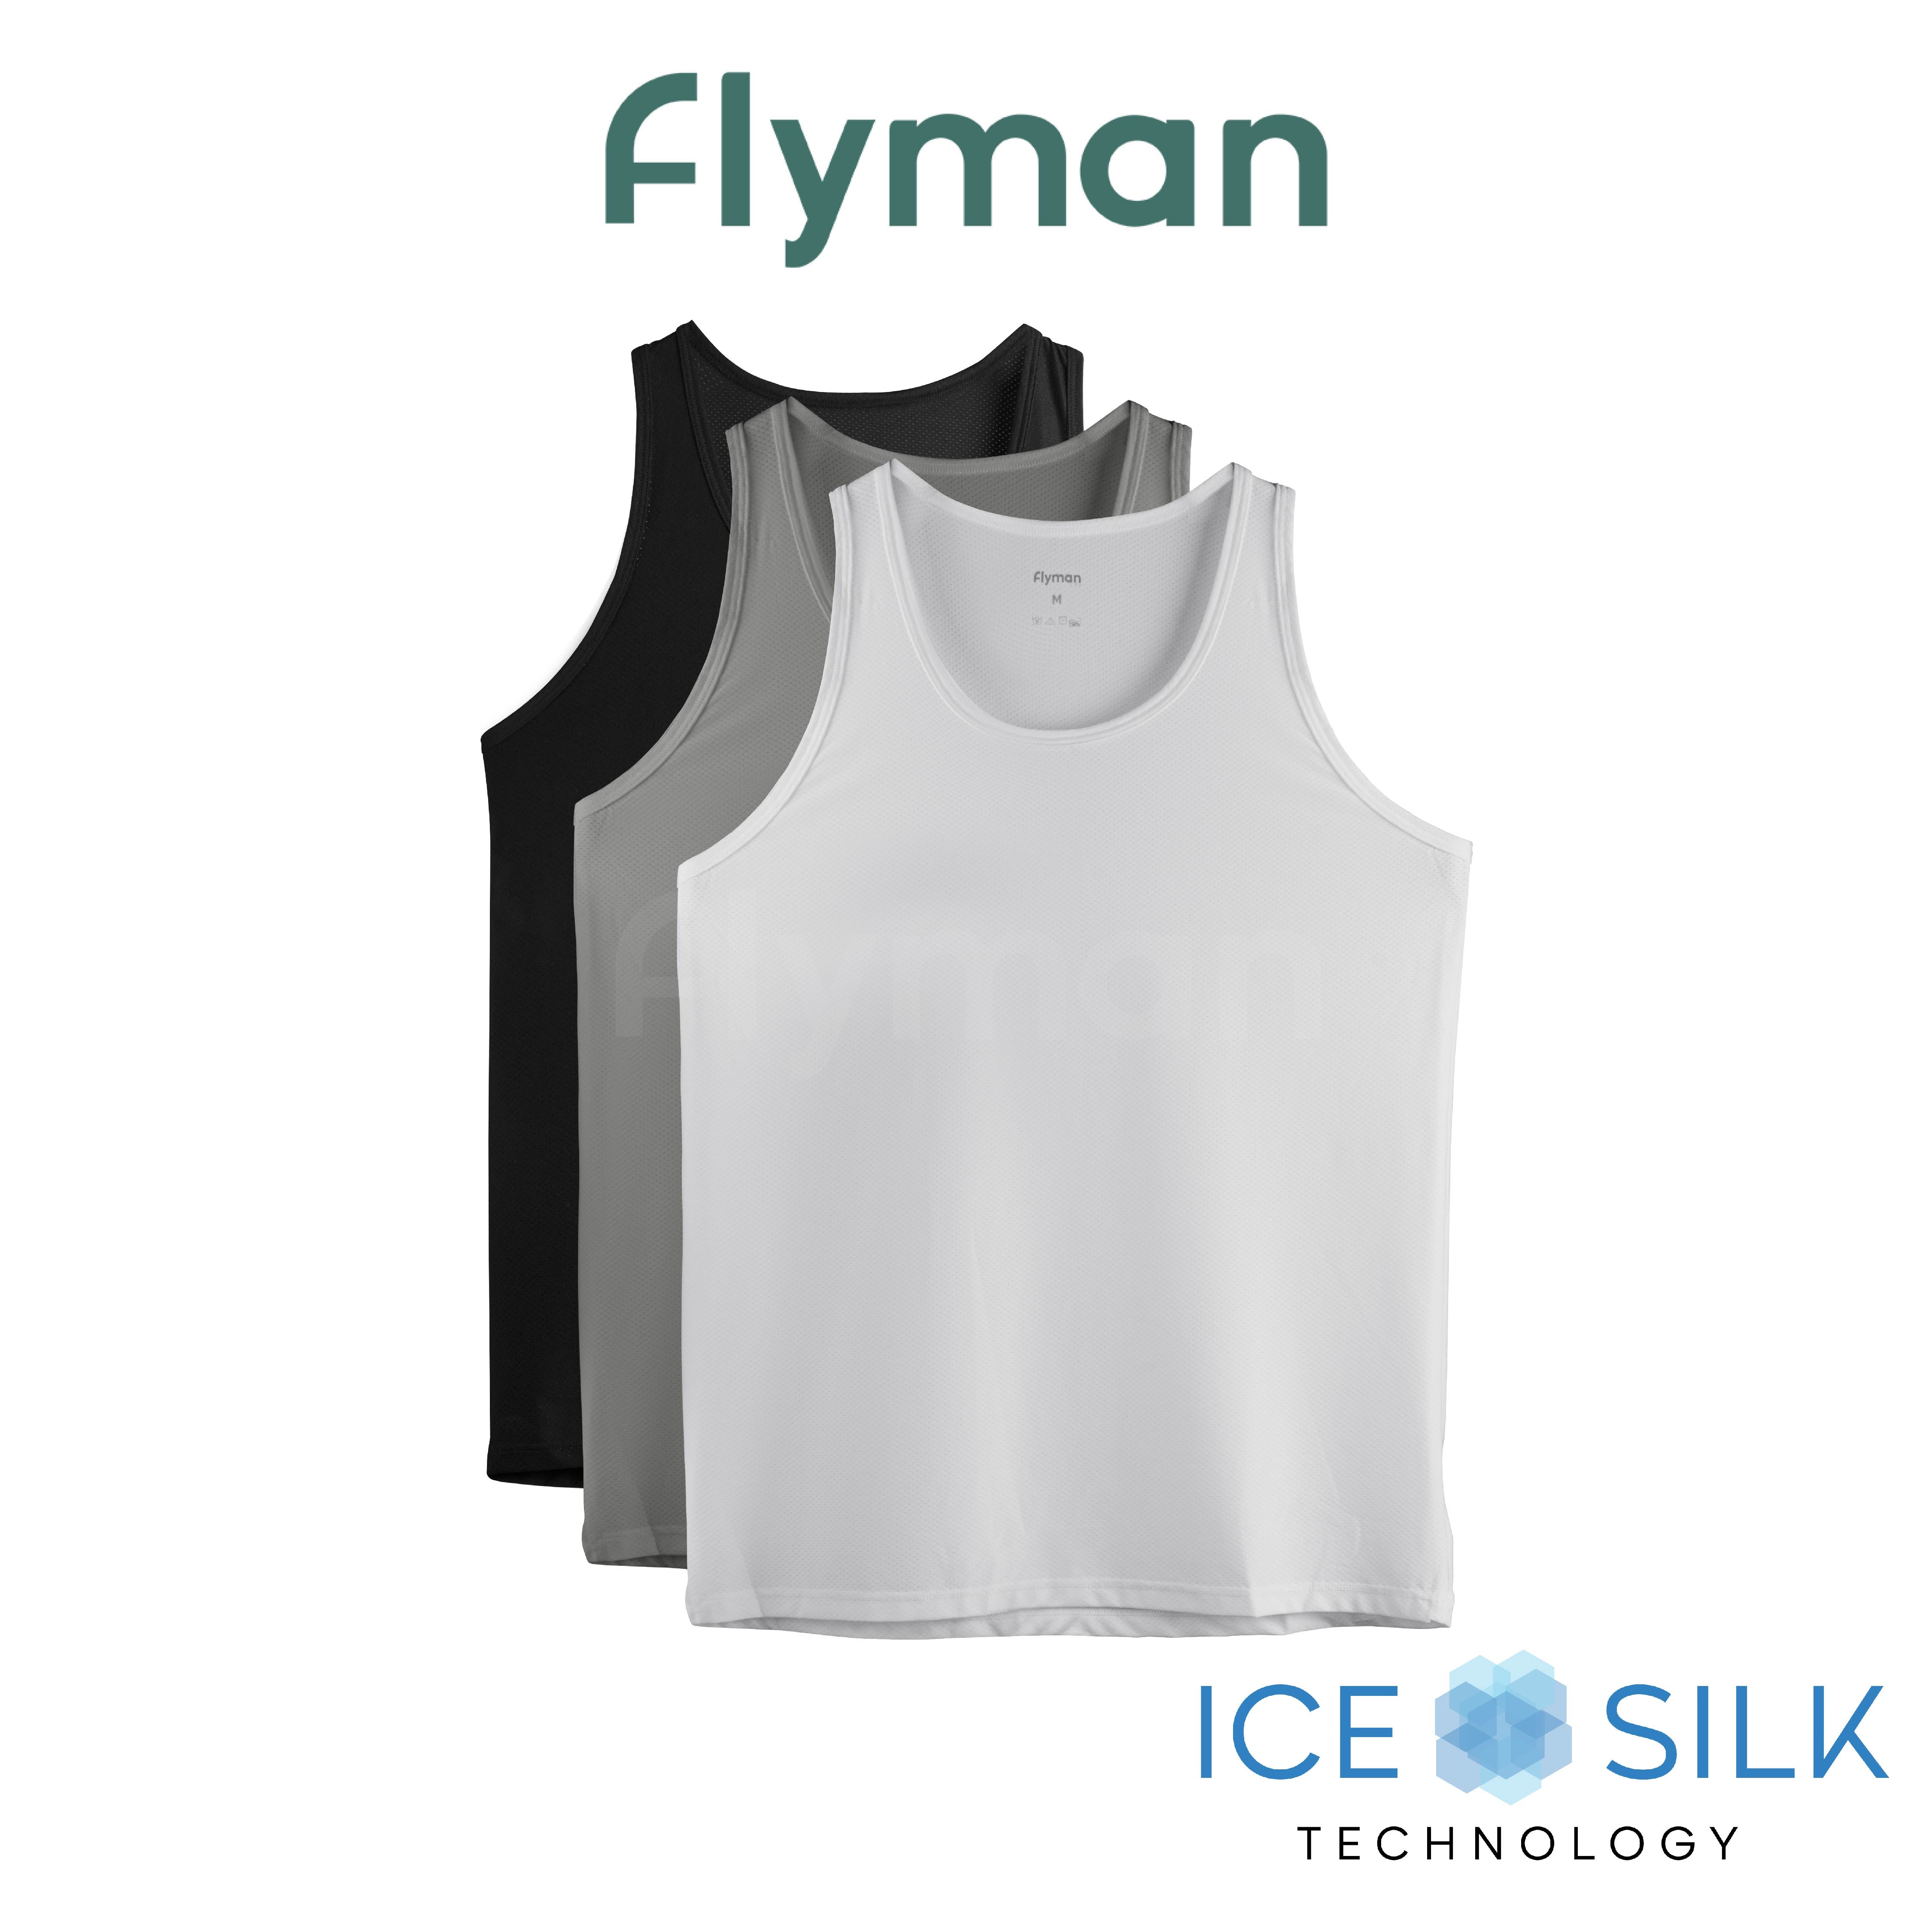 Flyman Kaos Singlet Pria Baju Dalam Cowok Ice Silk Kaus Daleman 1 Pcs FMA 3366